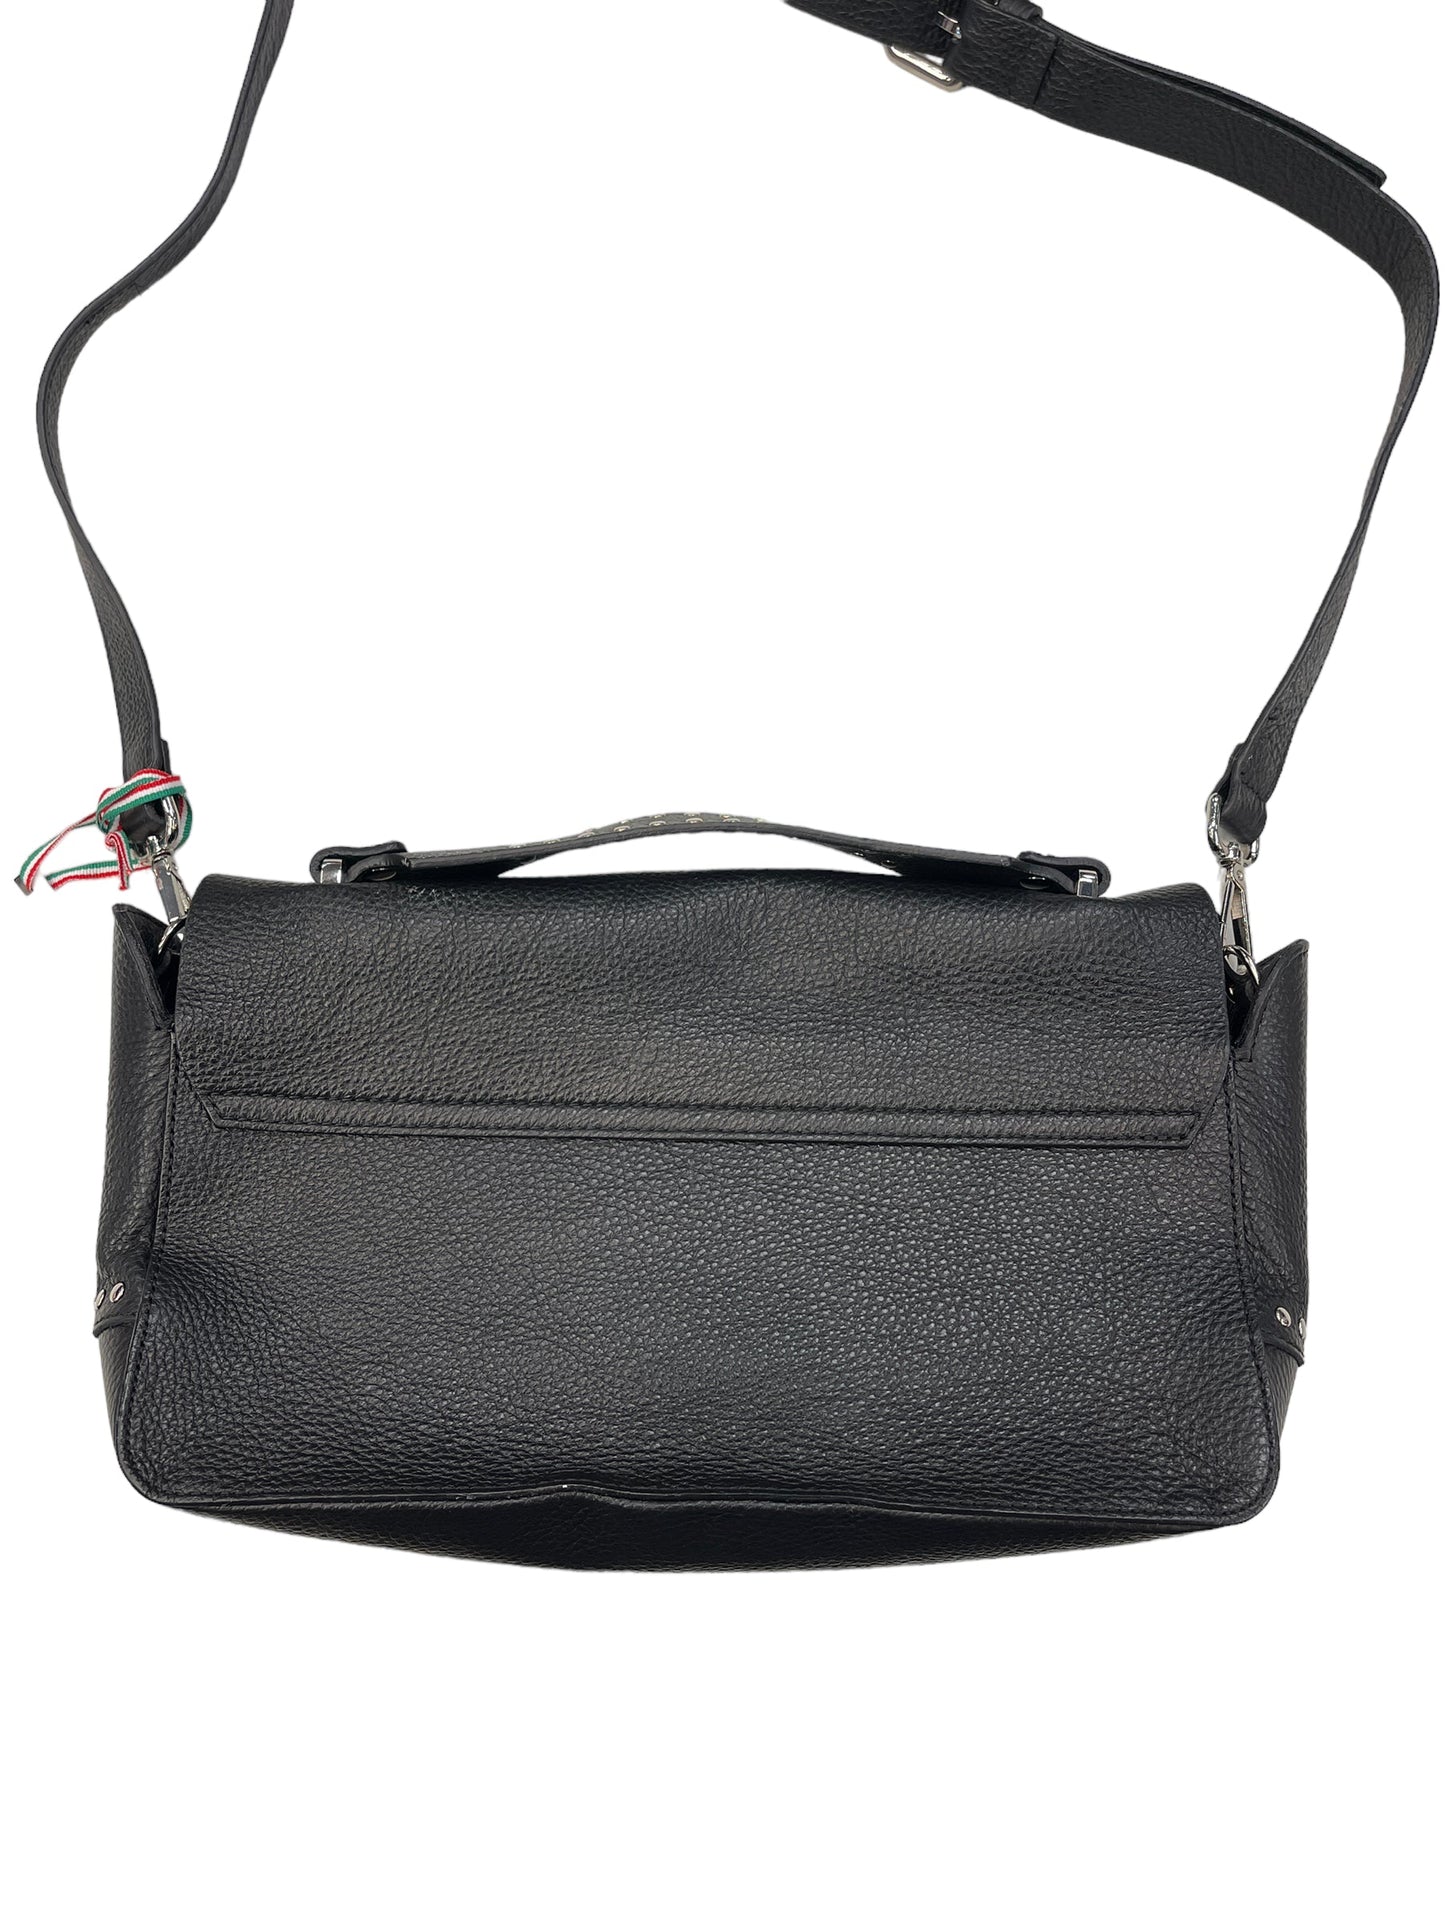 Handbag By Cma  Size: Medium